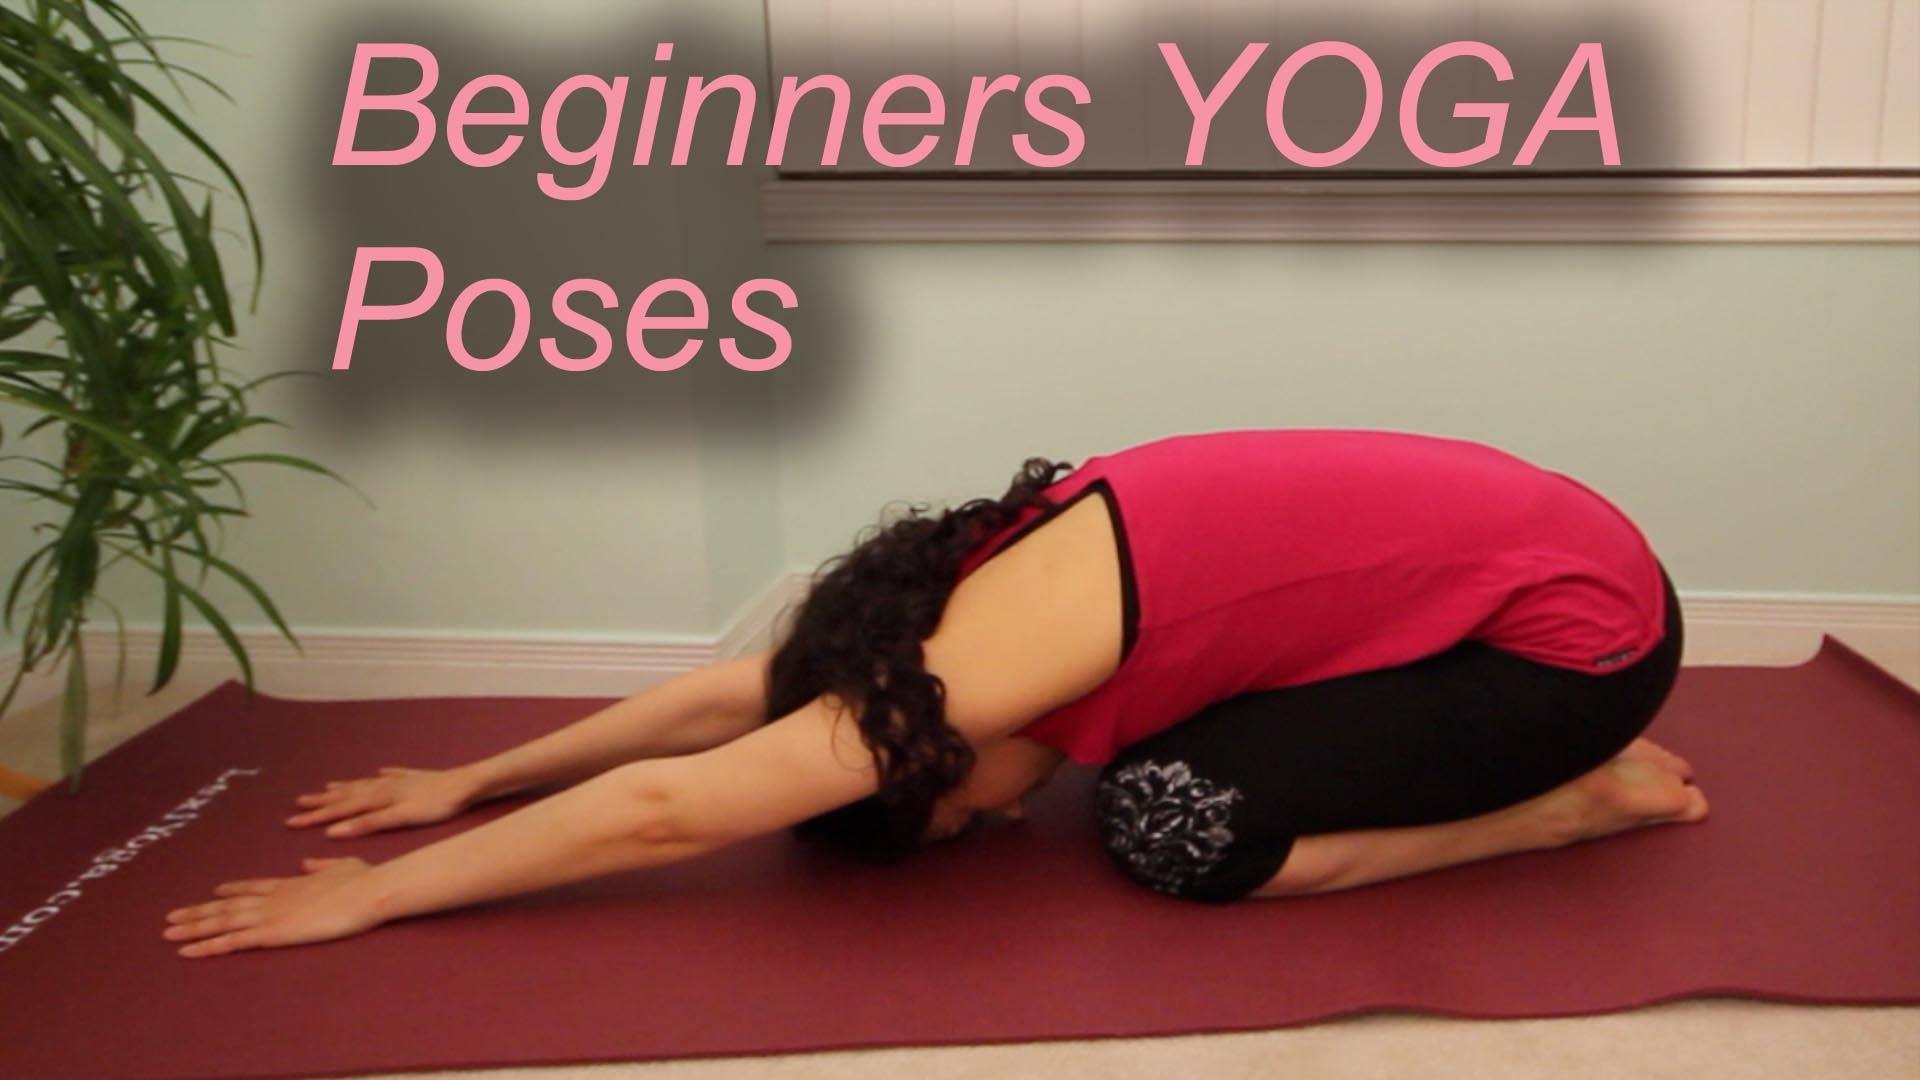 Beginners Yoga Poses - YouTube